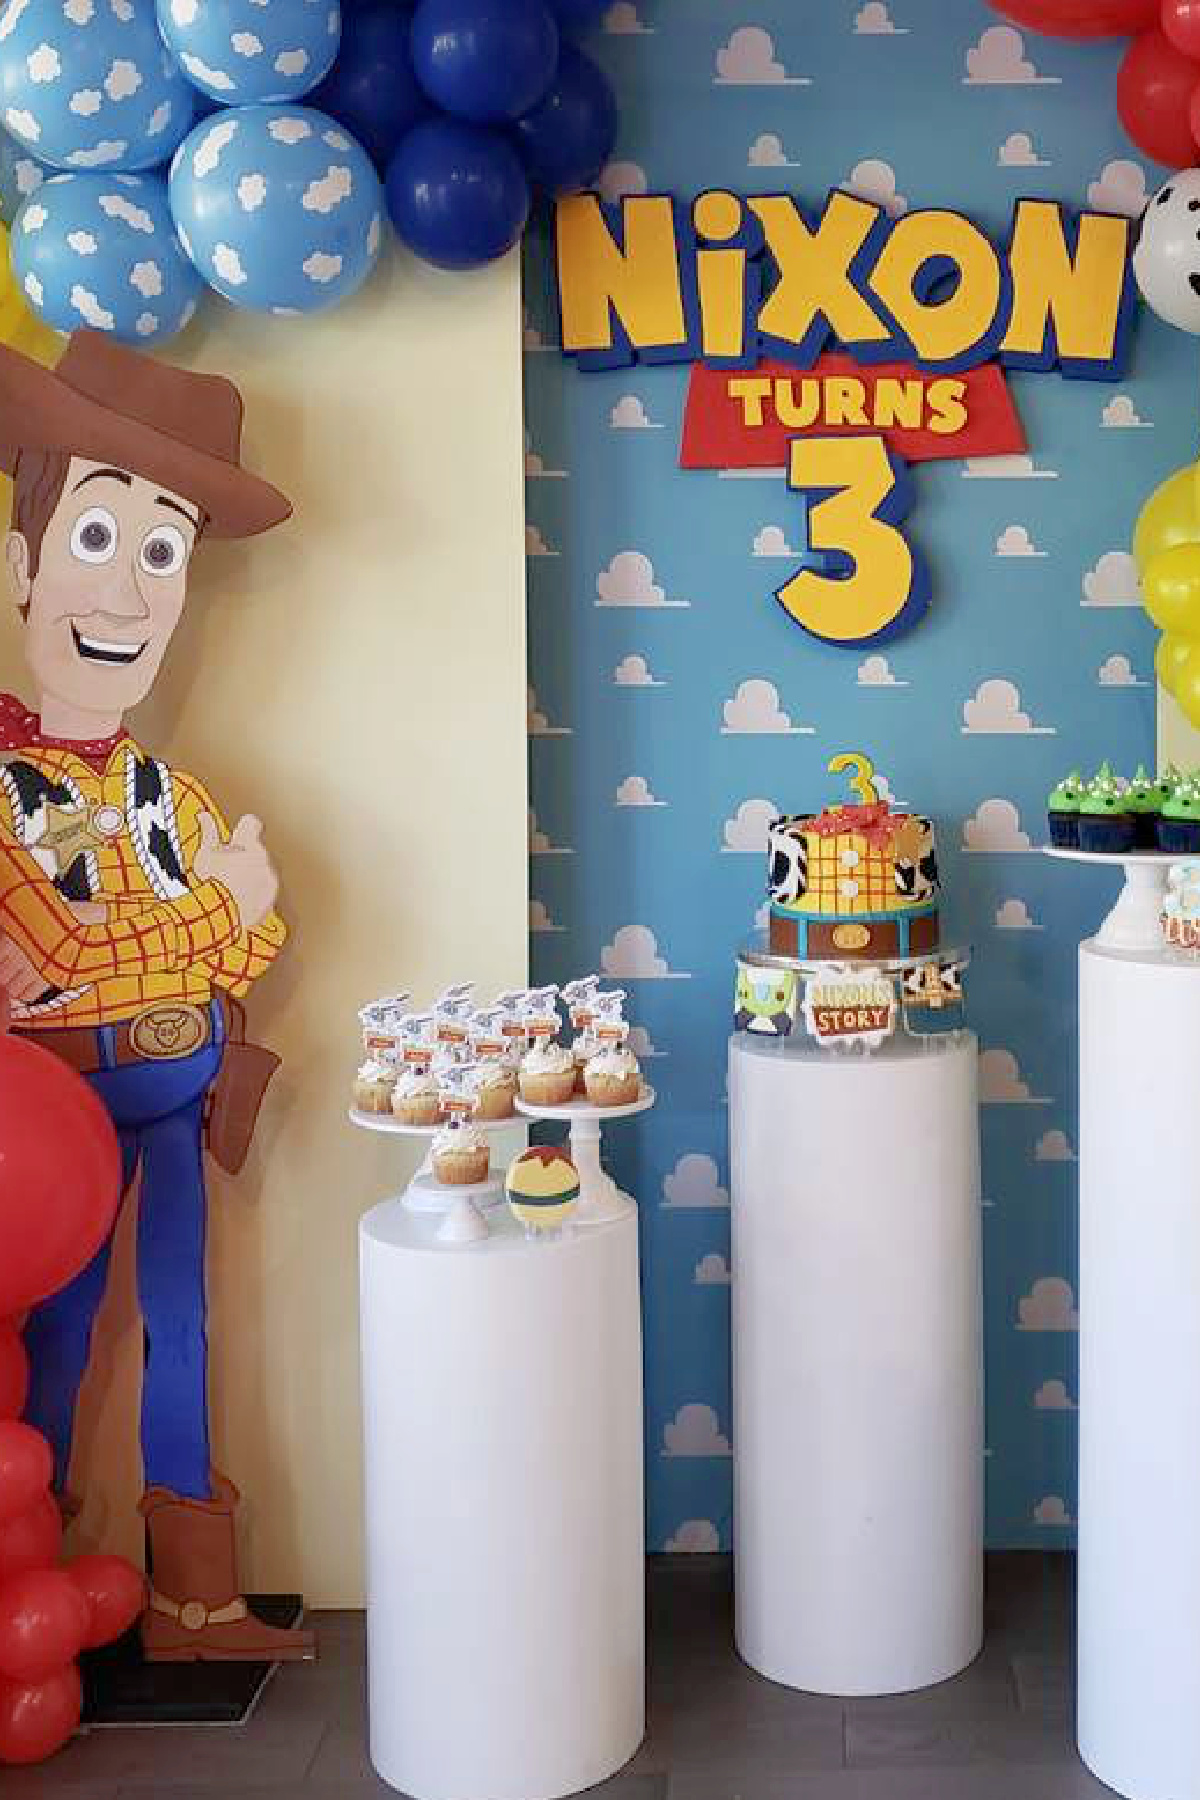 Toy Story birthday party